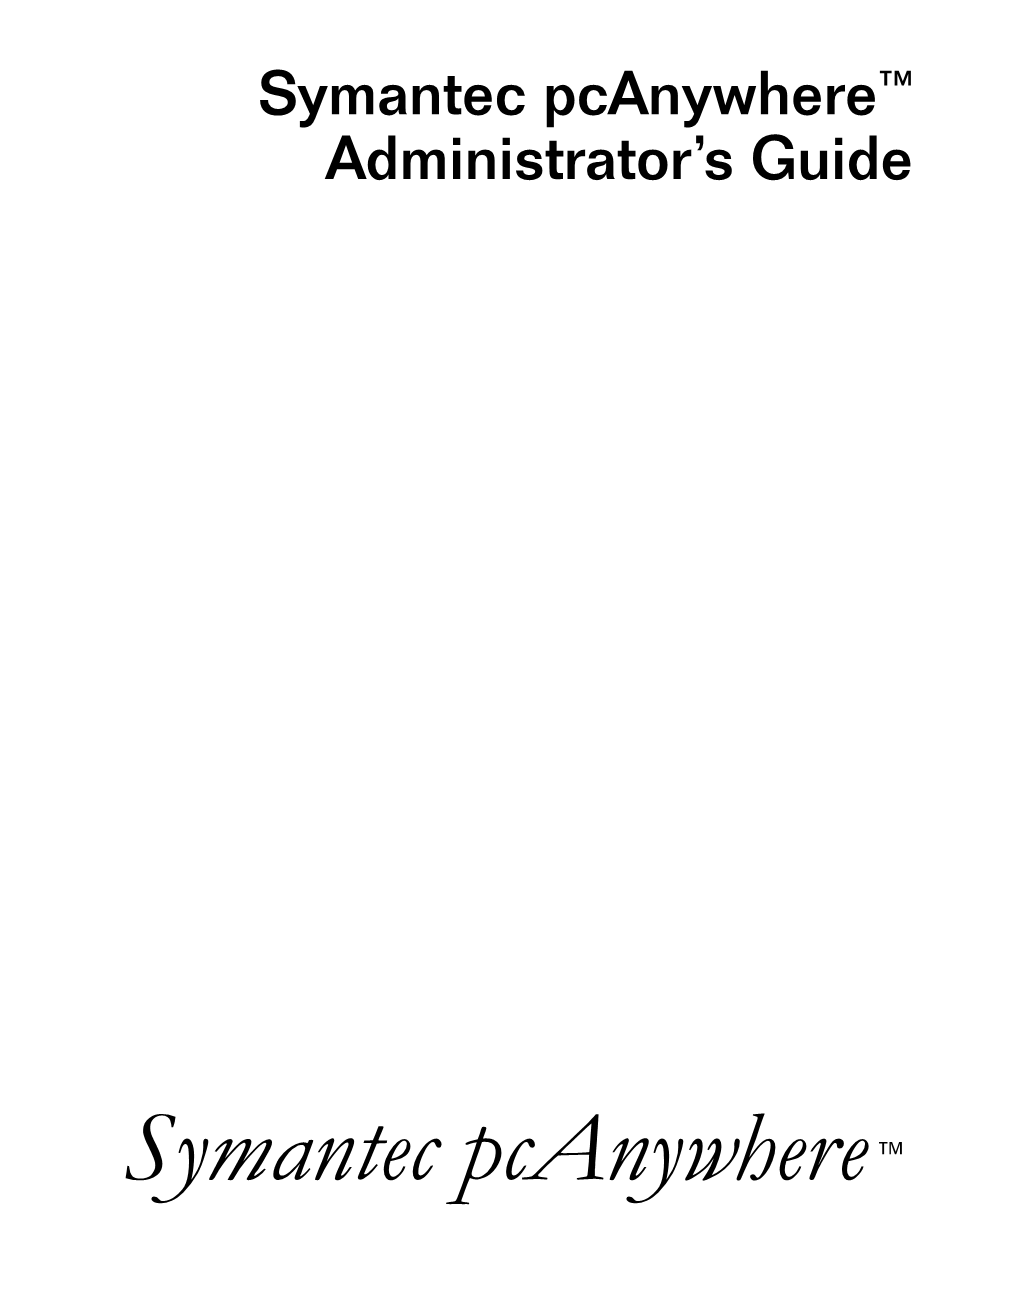 Symantec Pcanywhere™ Administrator's Guide